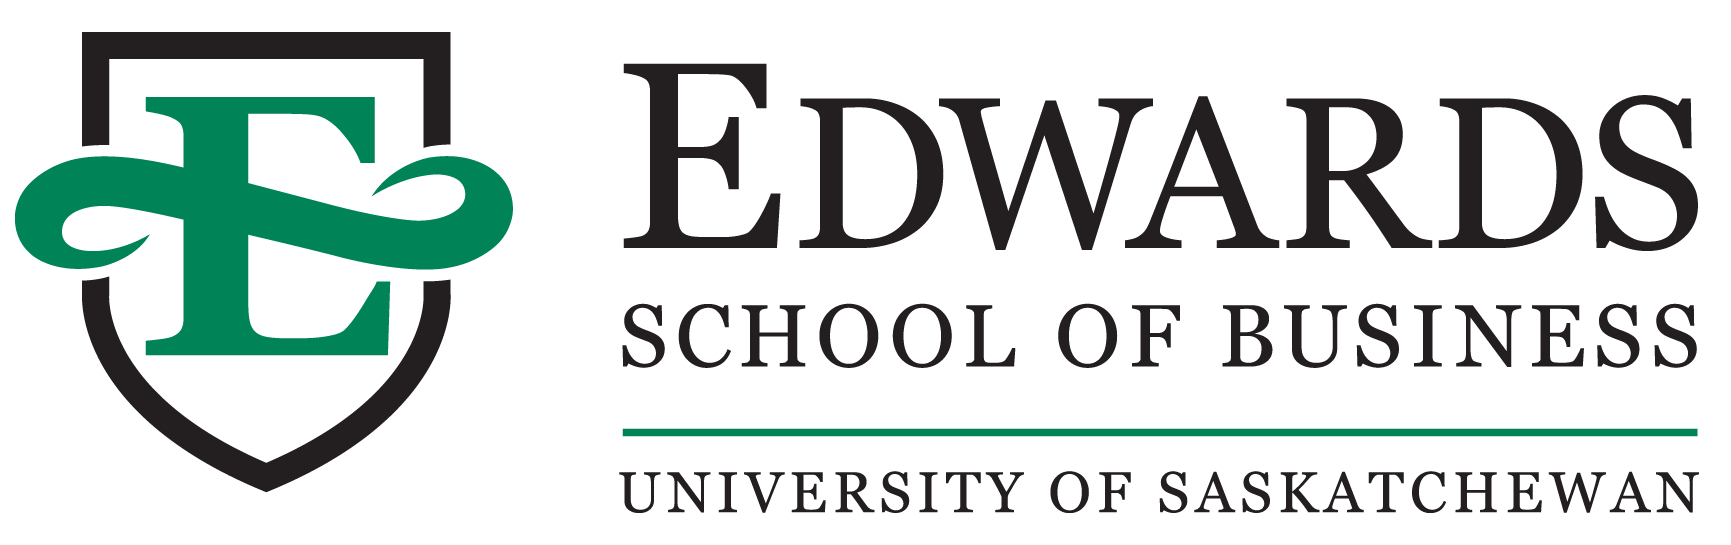 University of Saskatchewan - Edwards School of Business